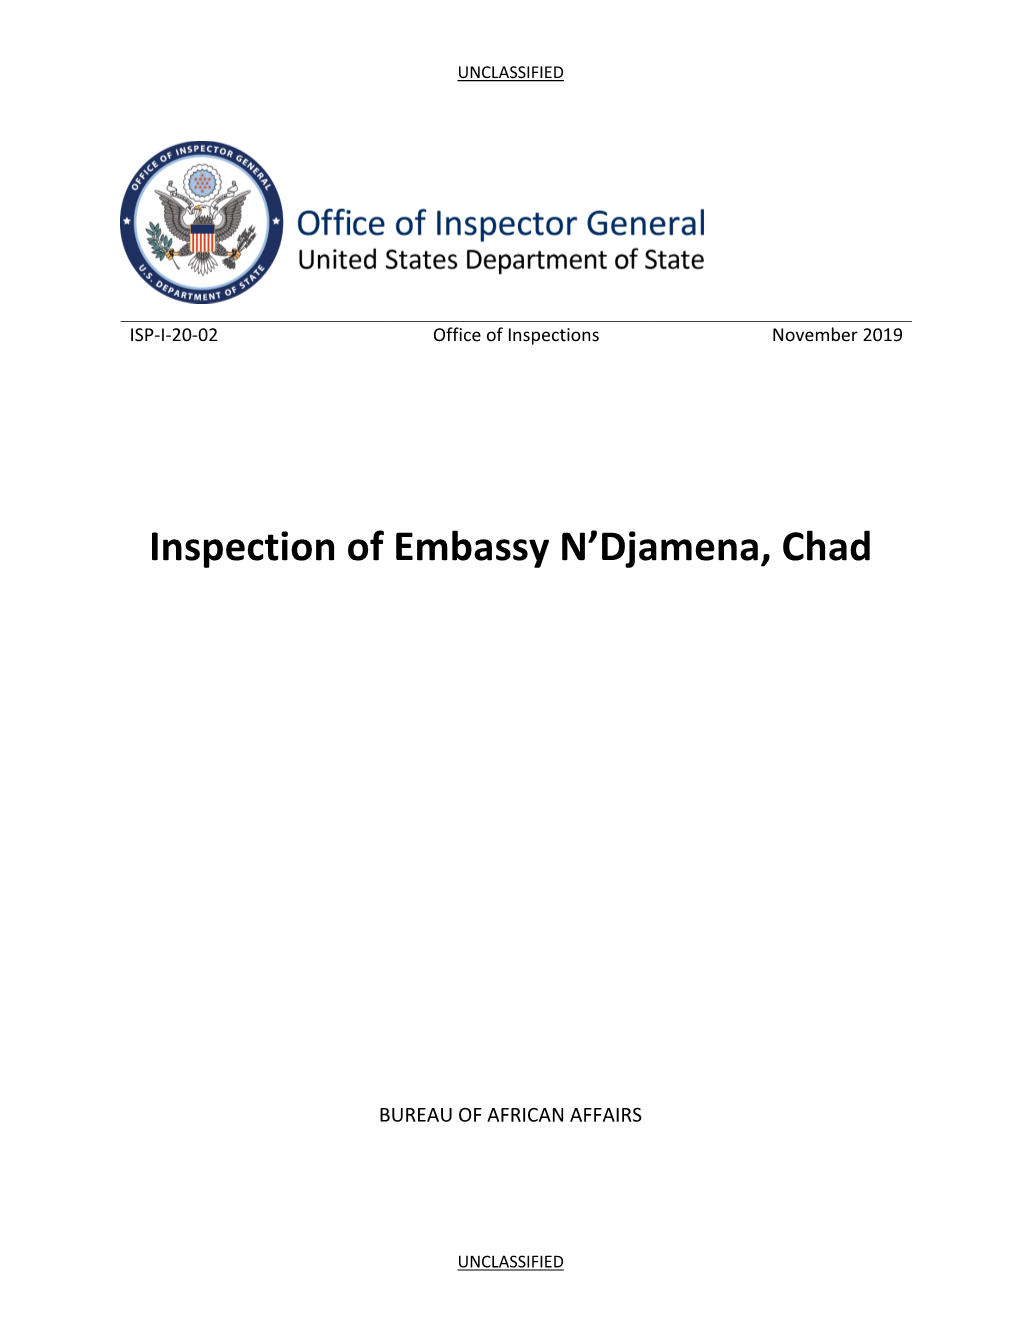 Inspection of Embassy N'djamena, Chad